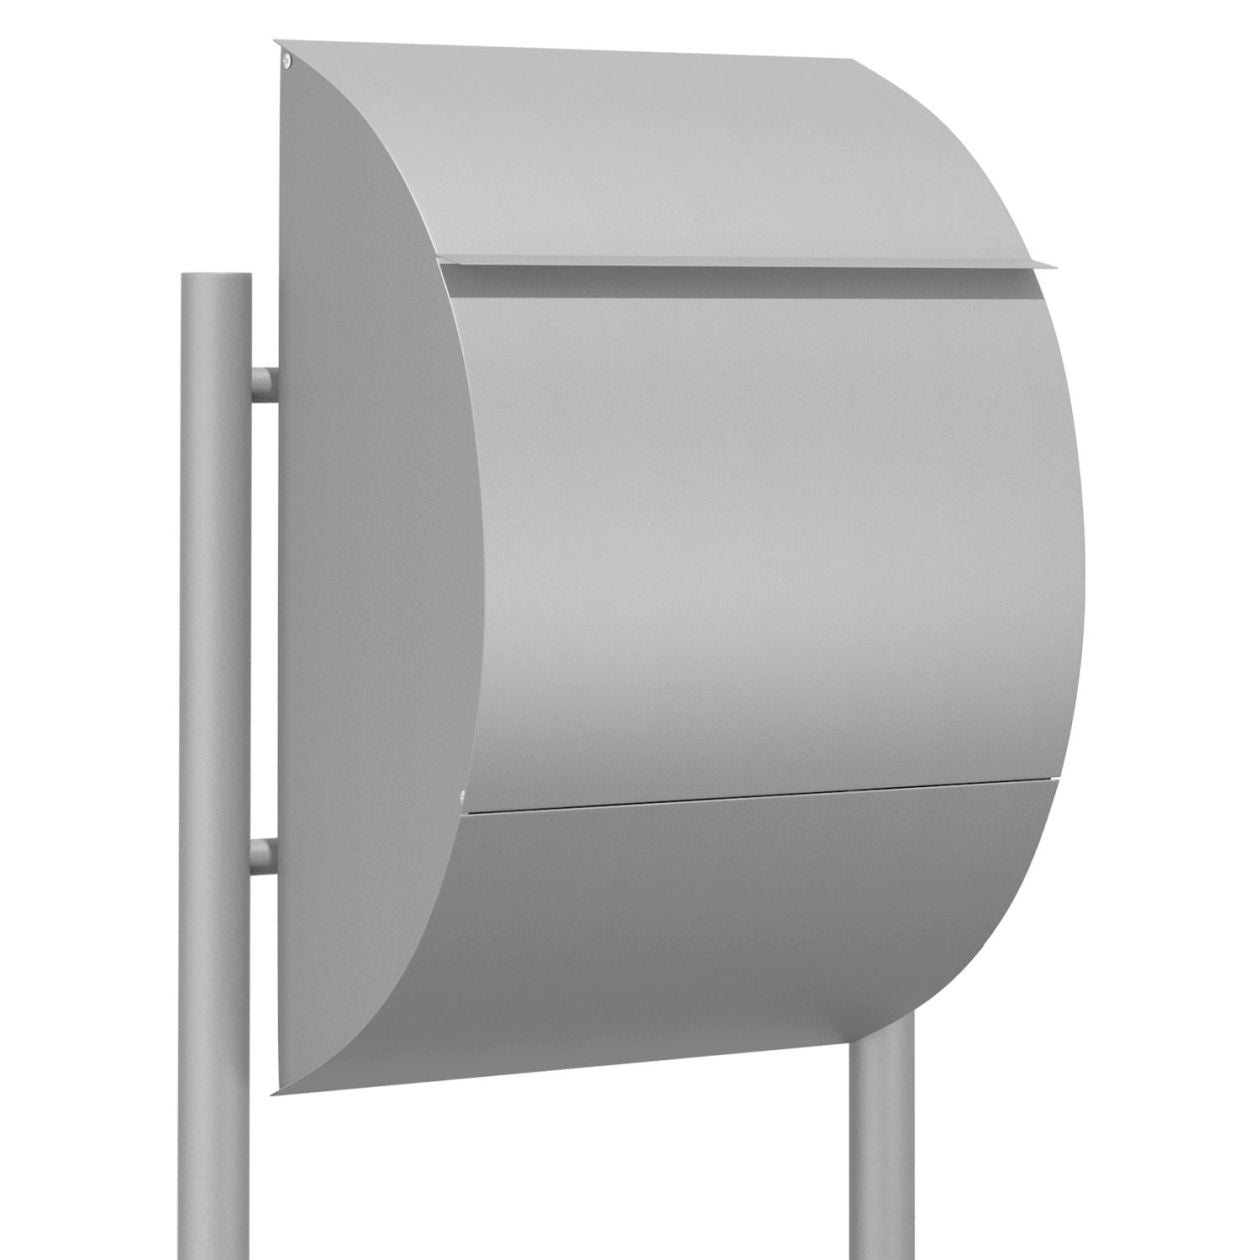 STAND JUMBO by Bravios - Modern post-mounted gray mailbox